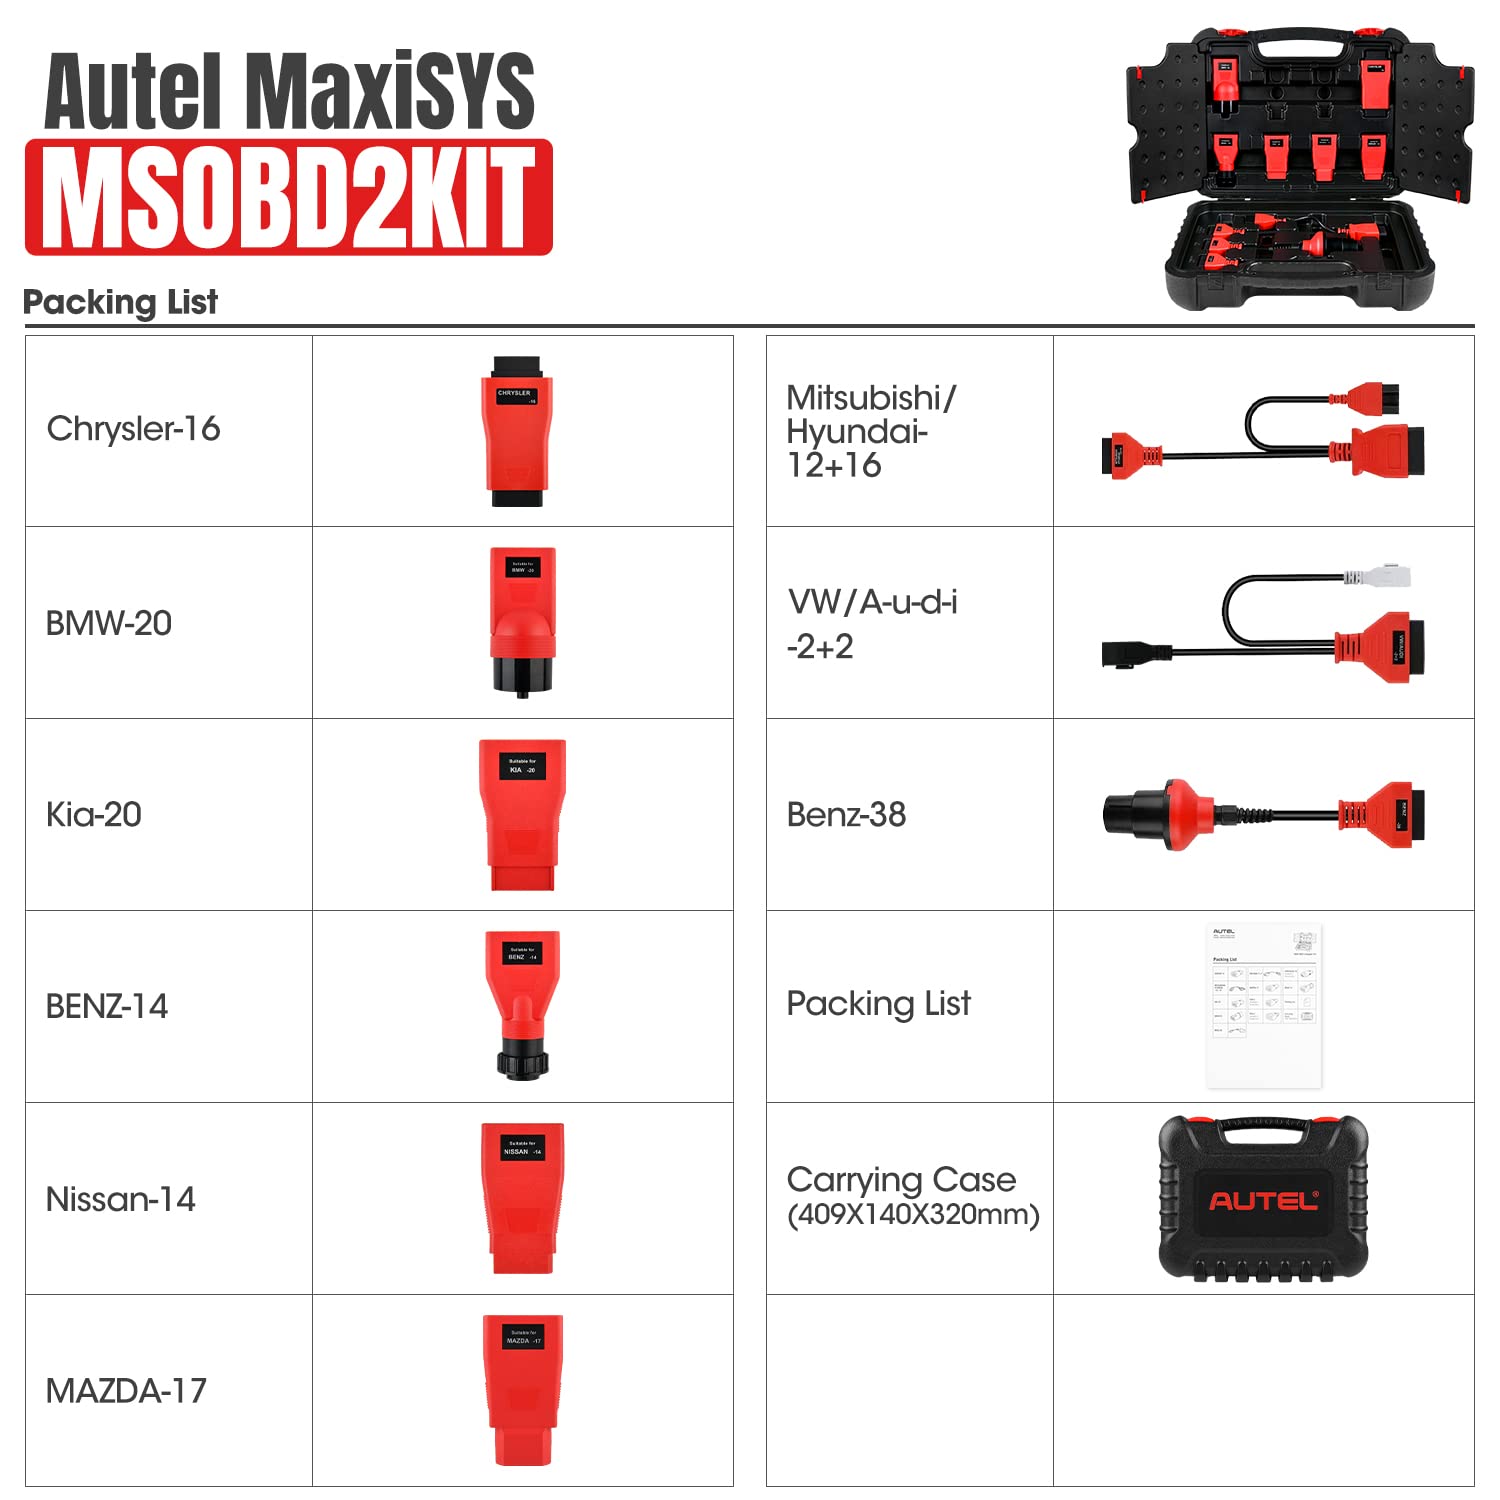 Kit adaptador Autel MaxiSYS MSOBD2KIT no OBDII incluido: Nissan-14, Mitsubishi/Hyundai 12+16, Kia-20, BMW-20, Benz-38, VW/Audi-2+2, Mazda-17, Chrysler-16 y Benz -14 9 conector